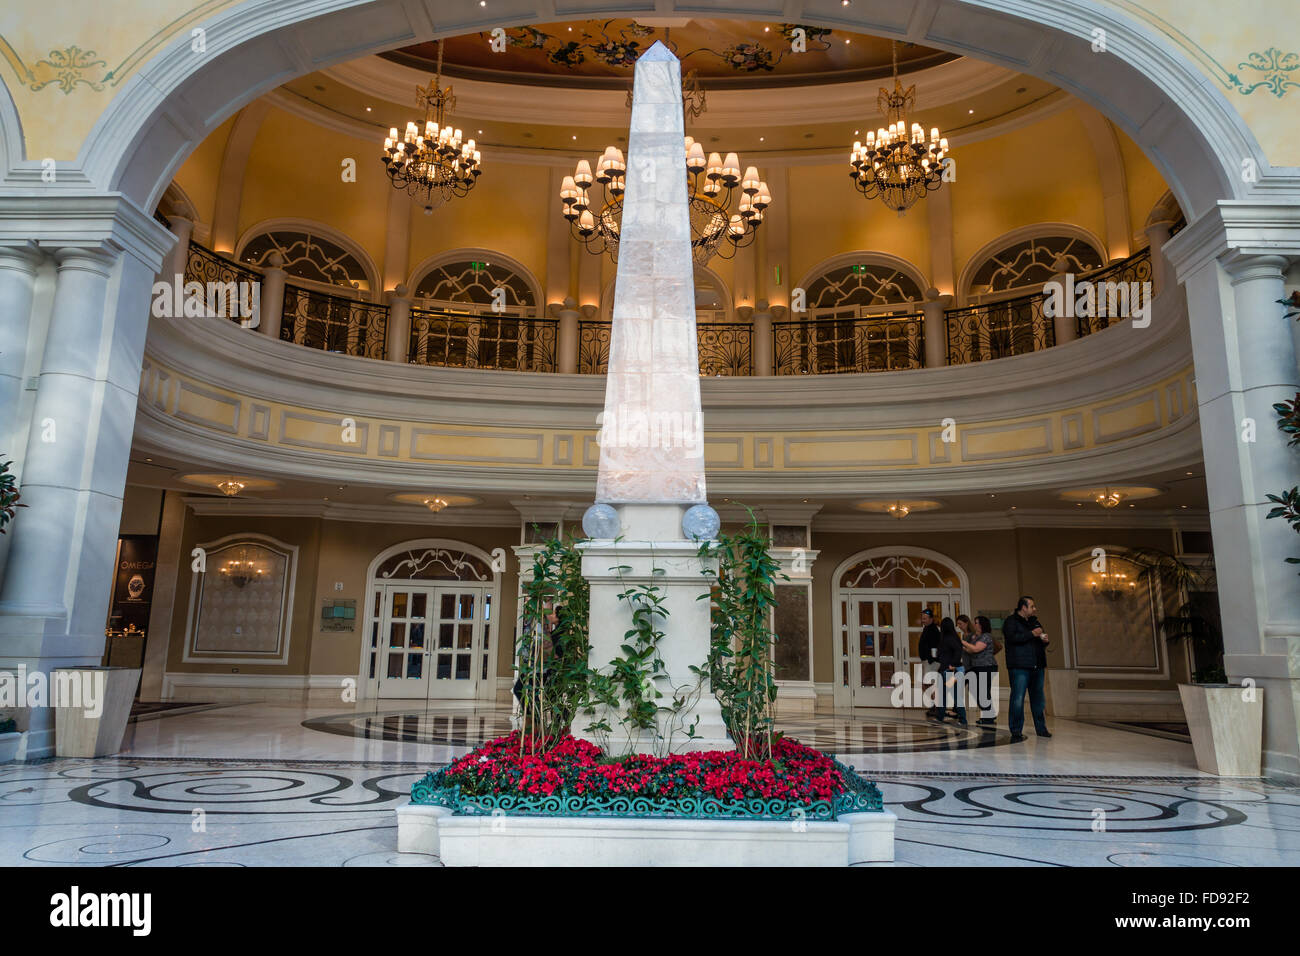 Stone obelisk in the greenhouse at the Bellagio casino and resort Las Vegas, Nevada, USA Stock Photo